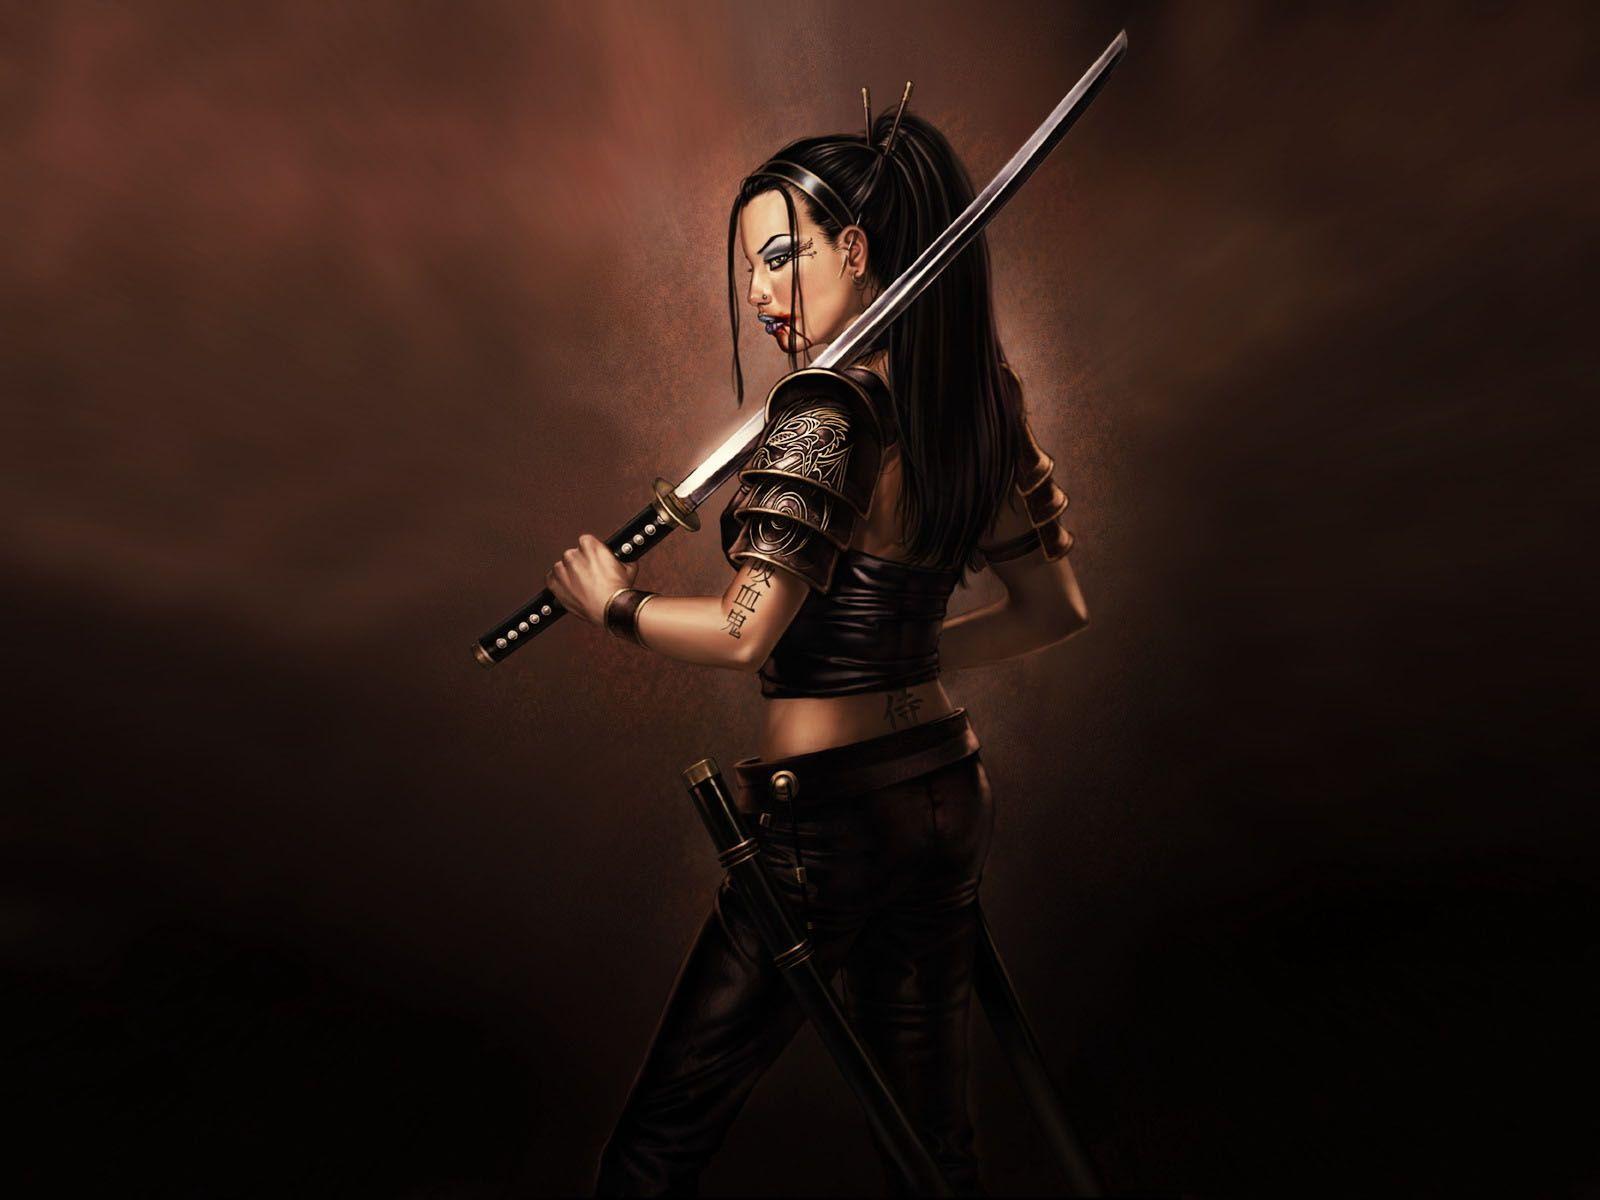 image For > Ninja Woman Warrior. Female samurai, Ninja